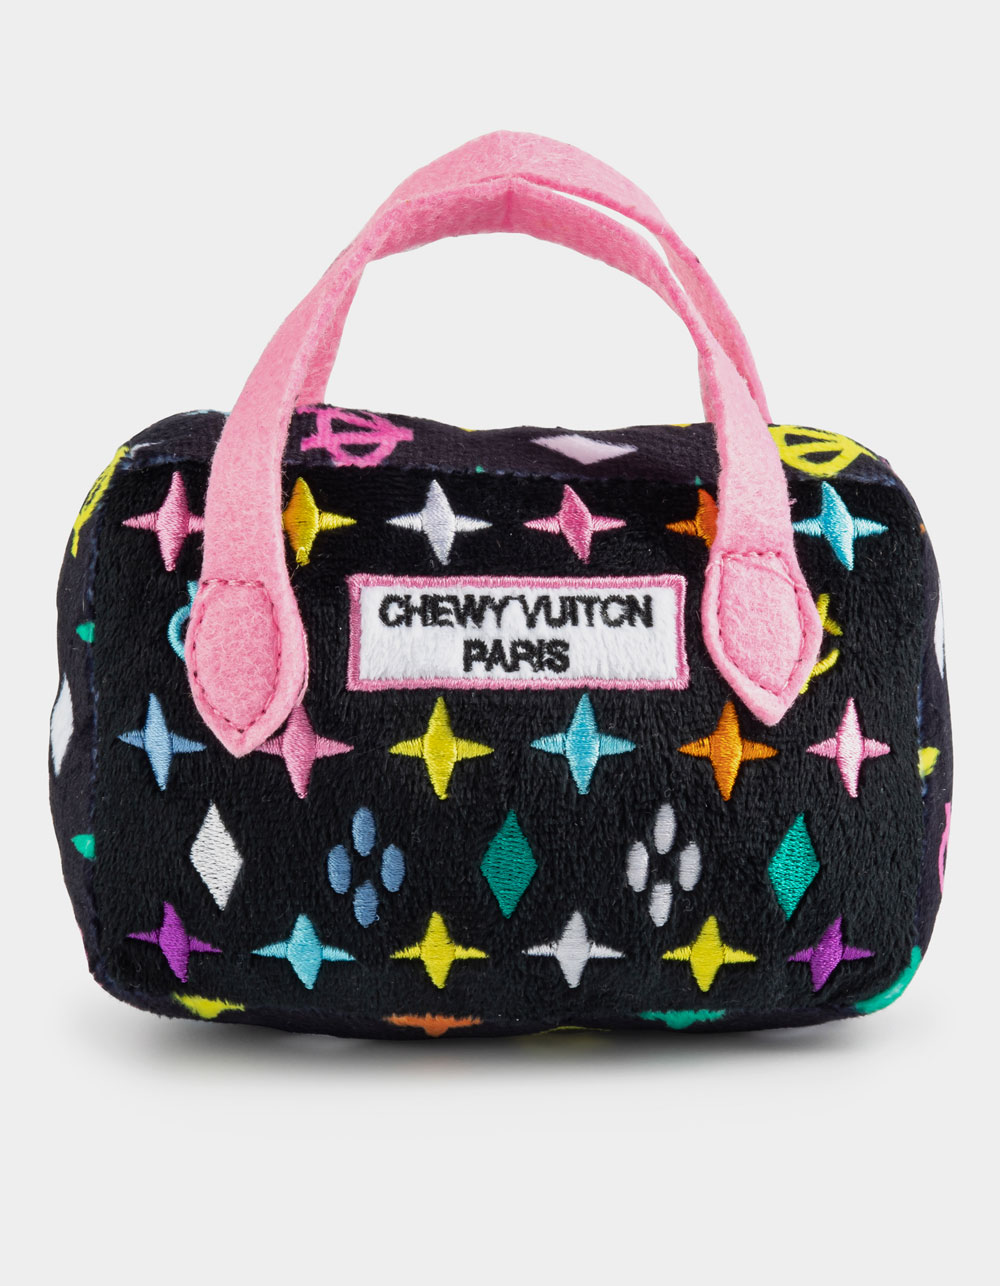 Chewy Vuiton Purse, Chewy Vuiton Handbag Toy, Purse Dog Toy, Chewy